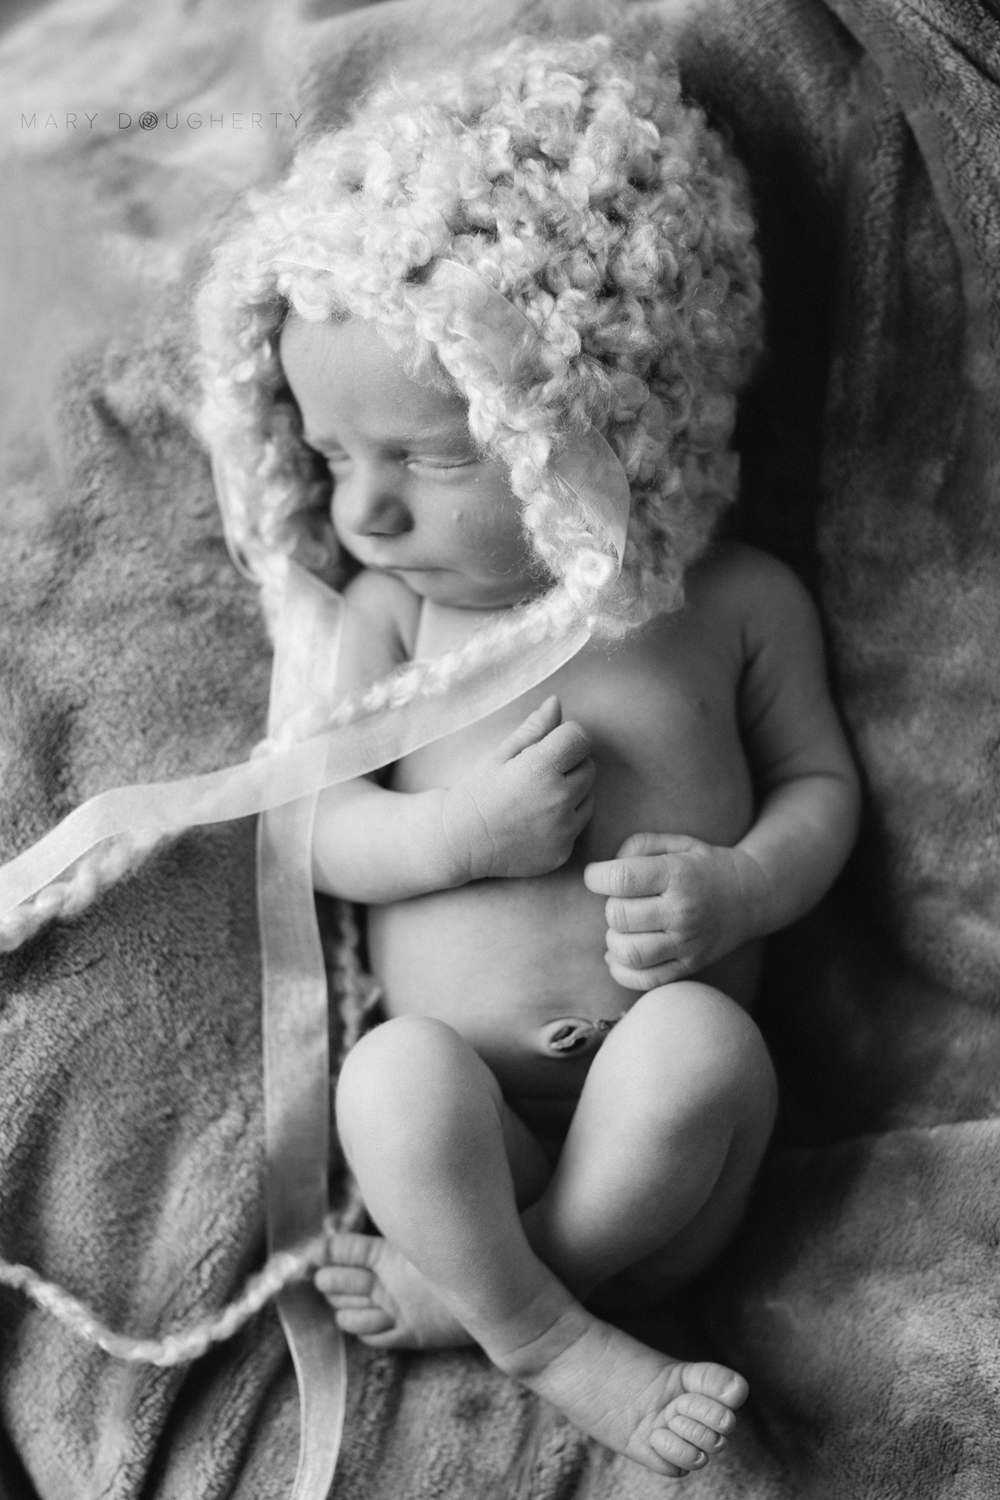 rochester_newborn_film_photography_mary_dougherty08